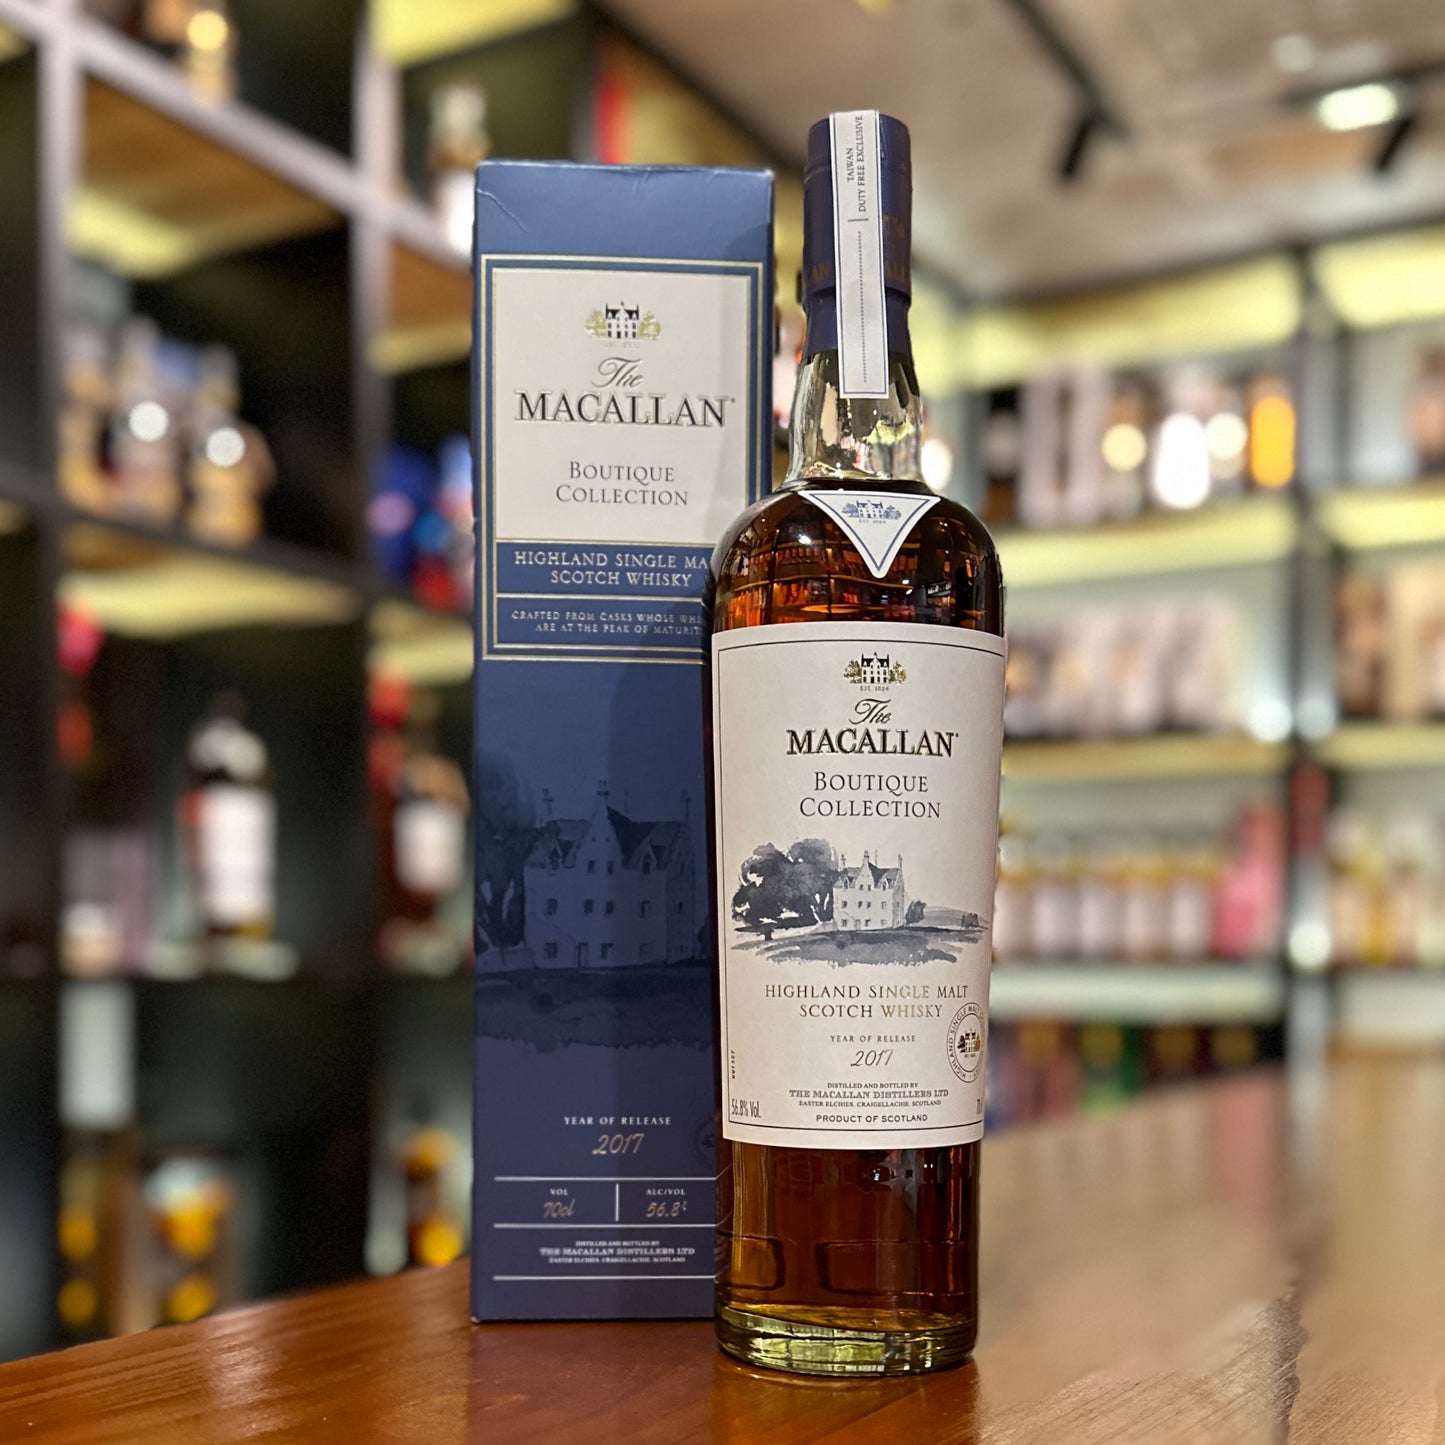 Macallan Boutique Collection (2017 Release) Single Malt Scotch Whisky